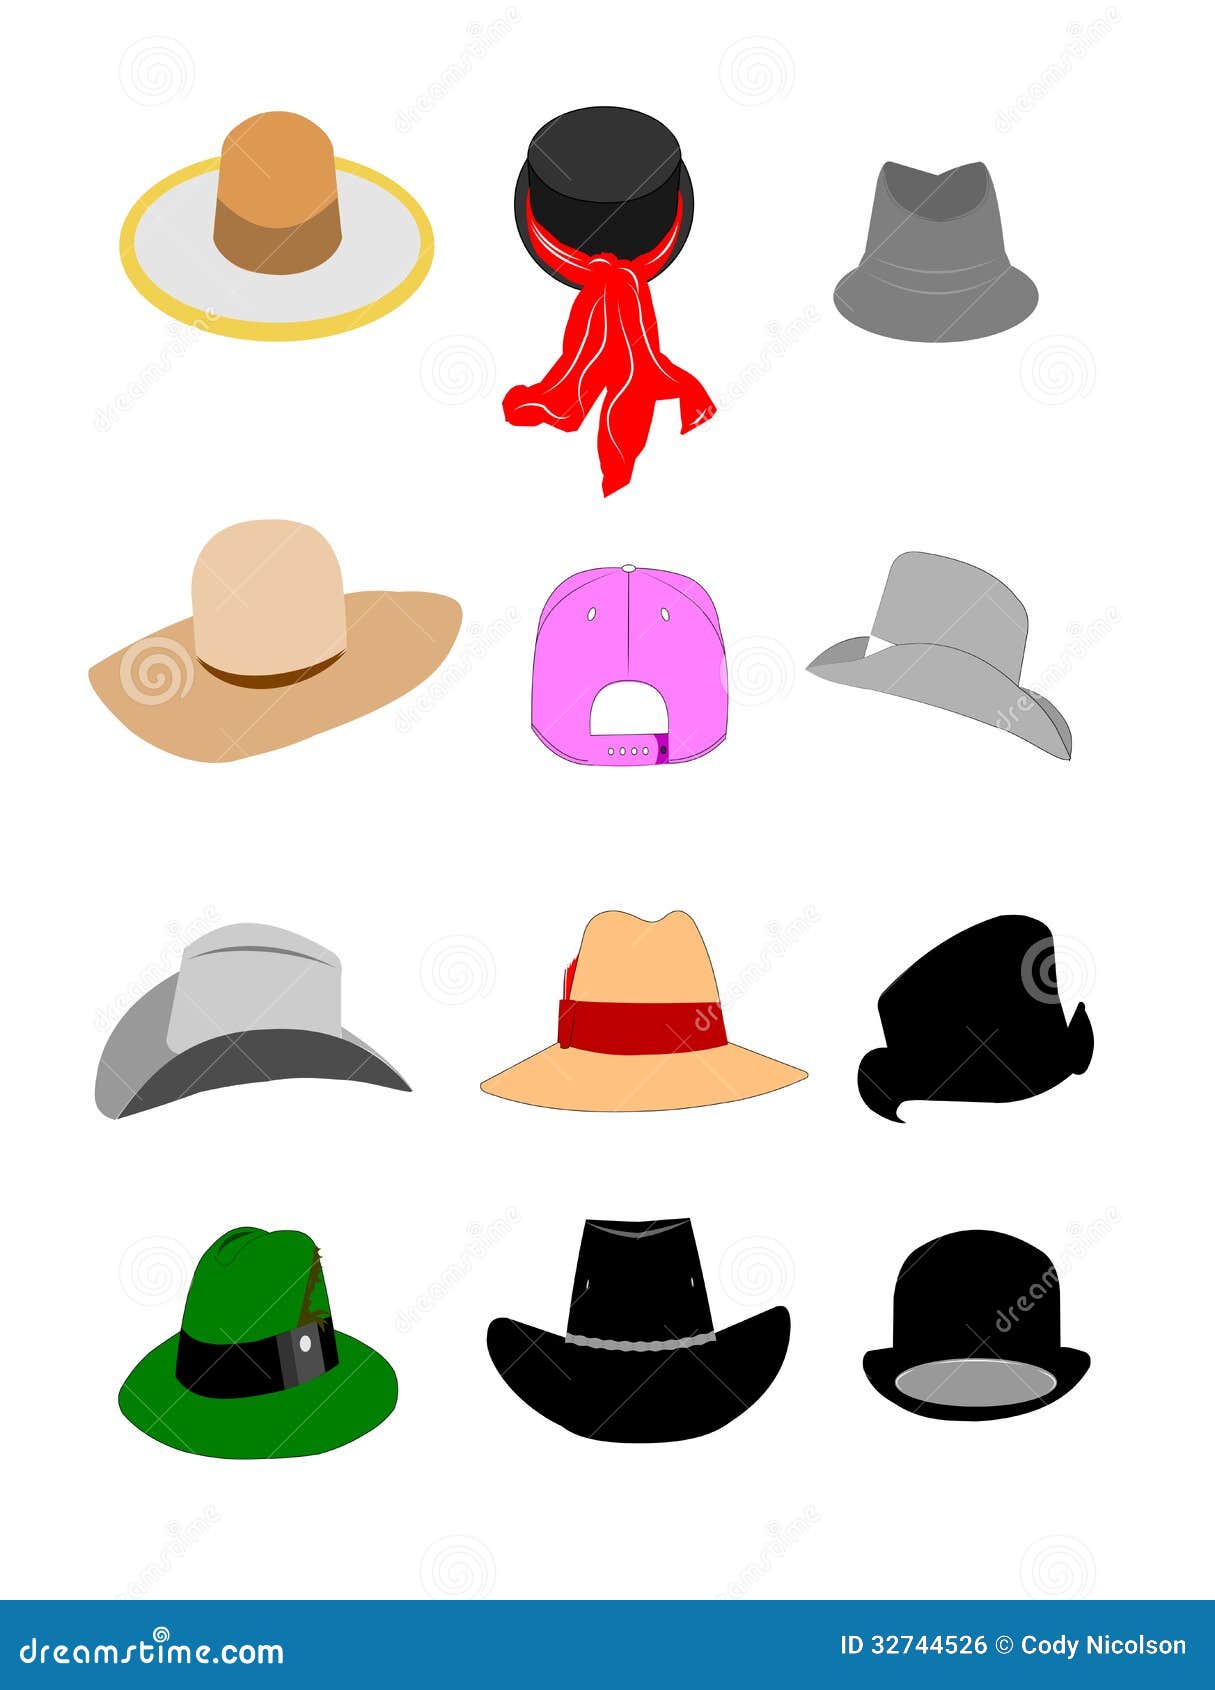 Hats Set Royalty Free Stock Image - Image: 32744526